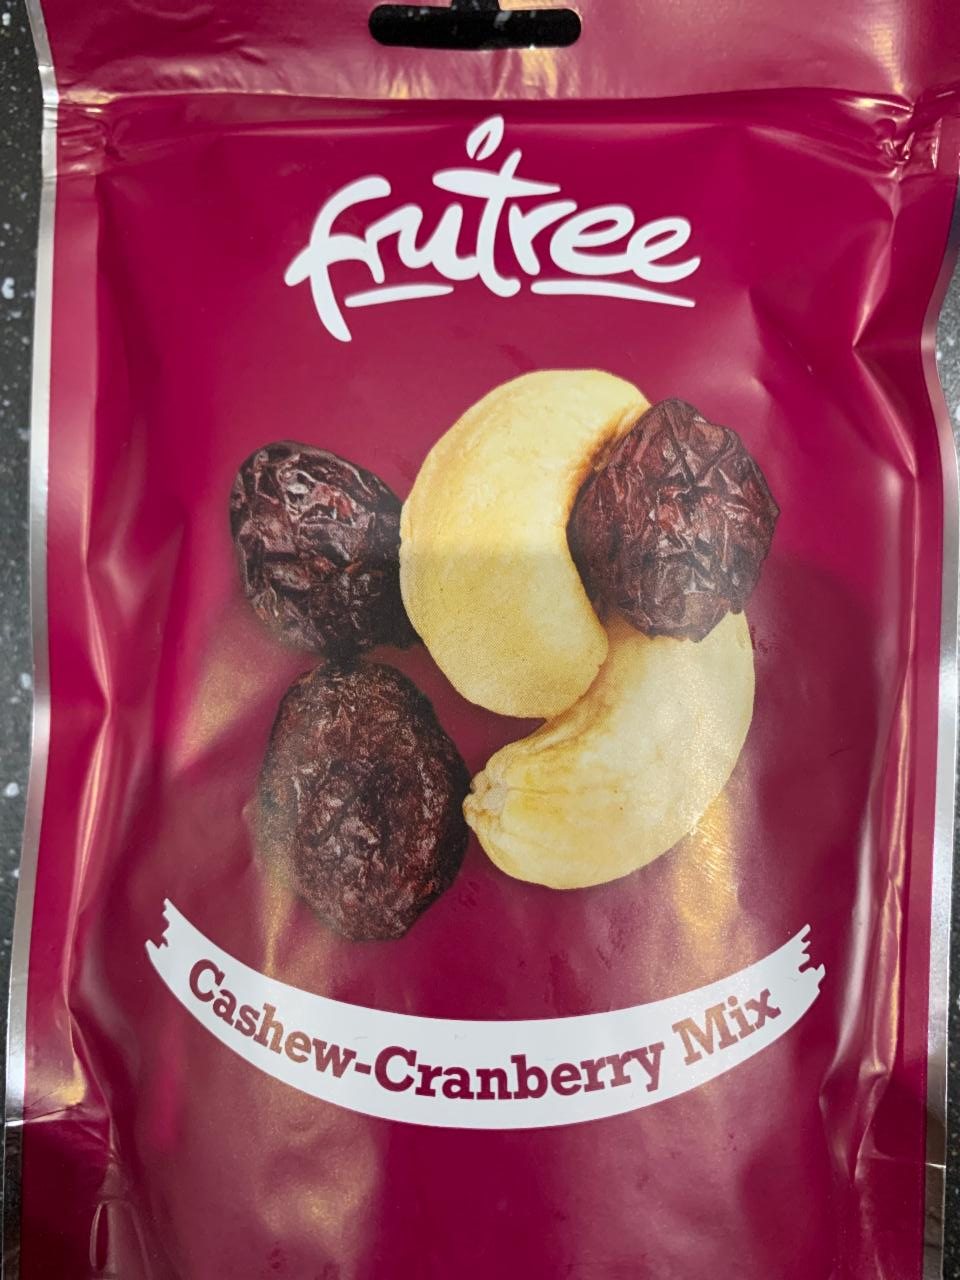 Fotografie - Cashew-Cranberry Mix Frutree